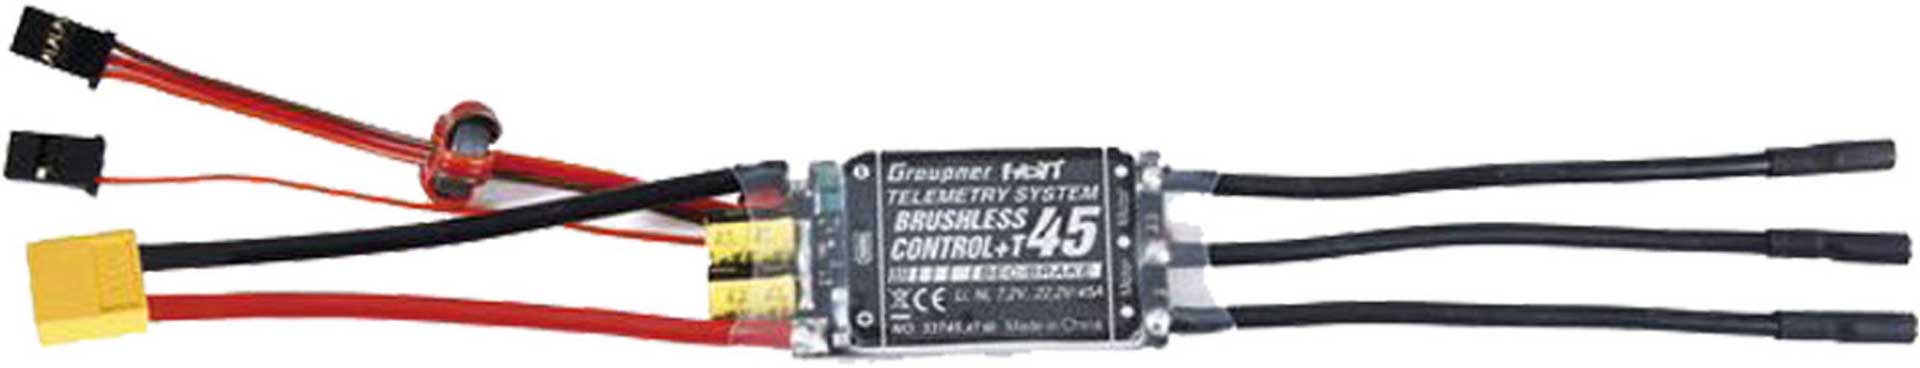 GRAUPNER BRUSHLESS CONTROL+ T 45 BEC G2 XT-60 RPM CONTROLLER WITH HOTT TELEMETRY